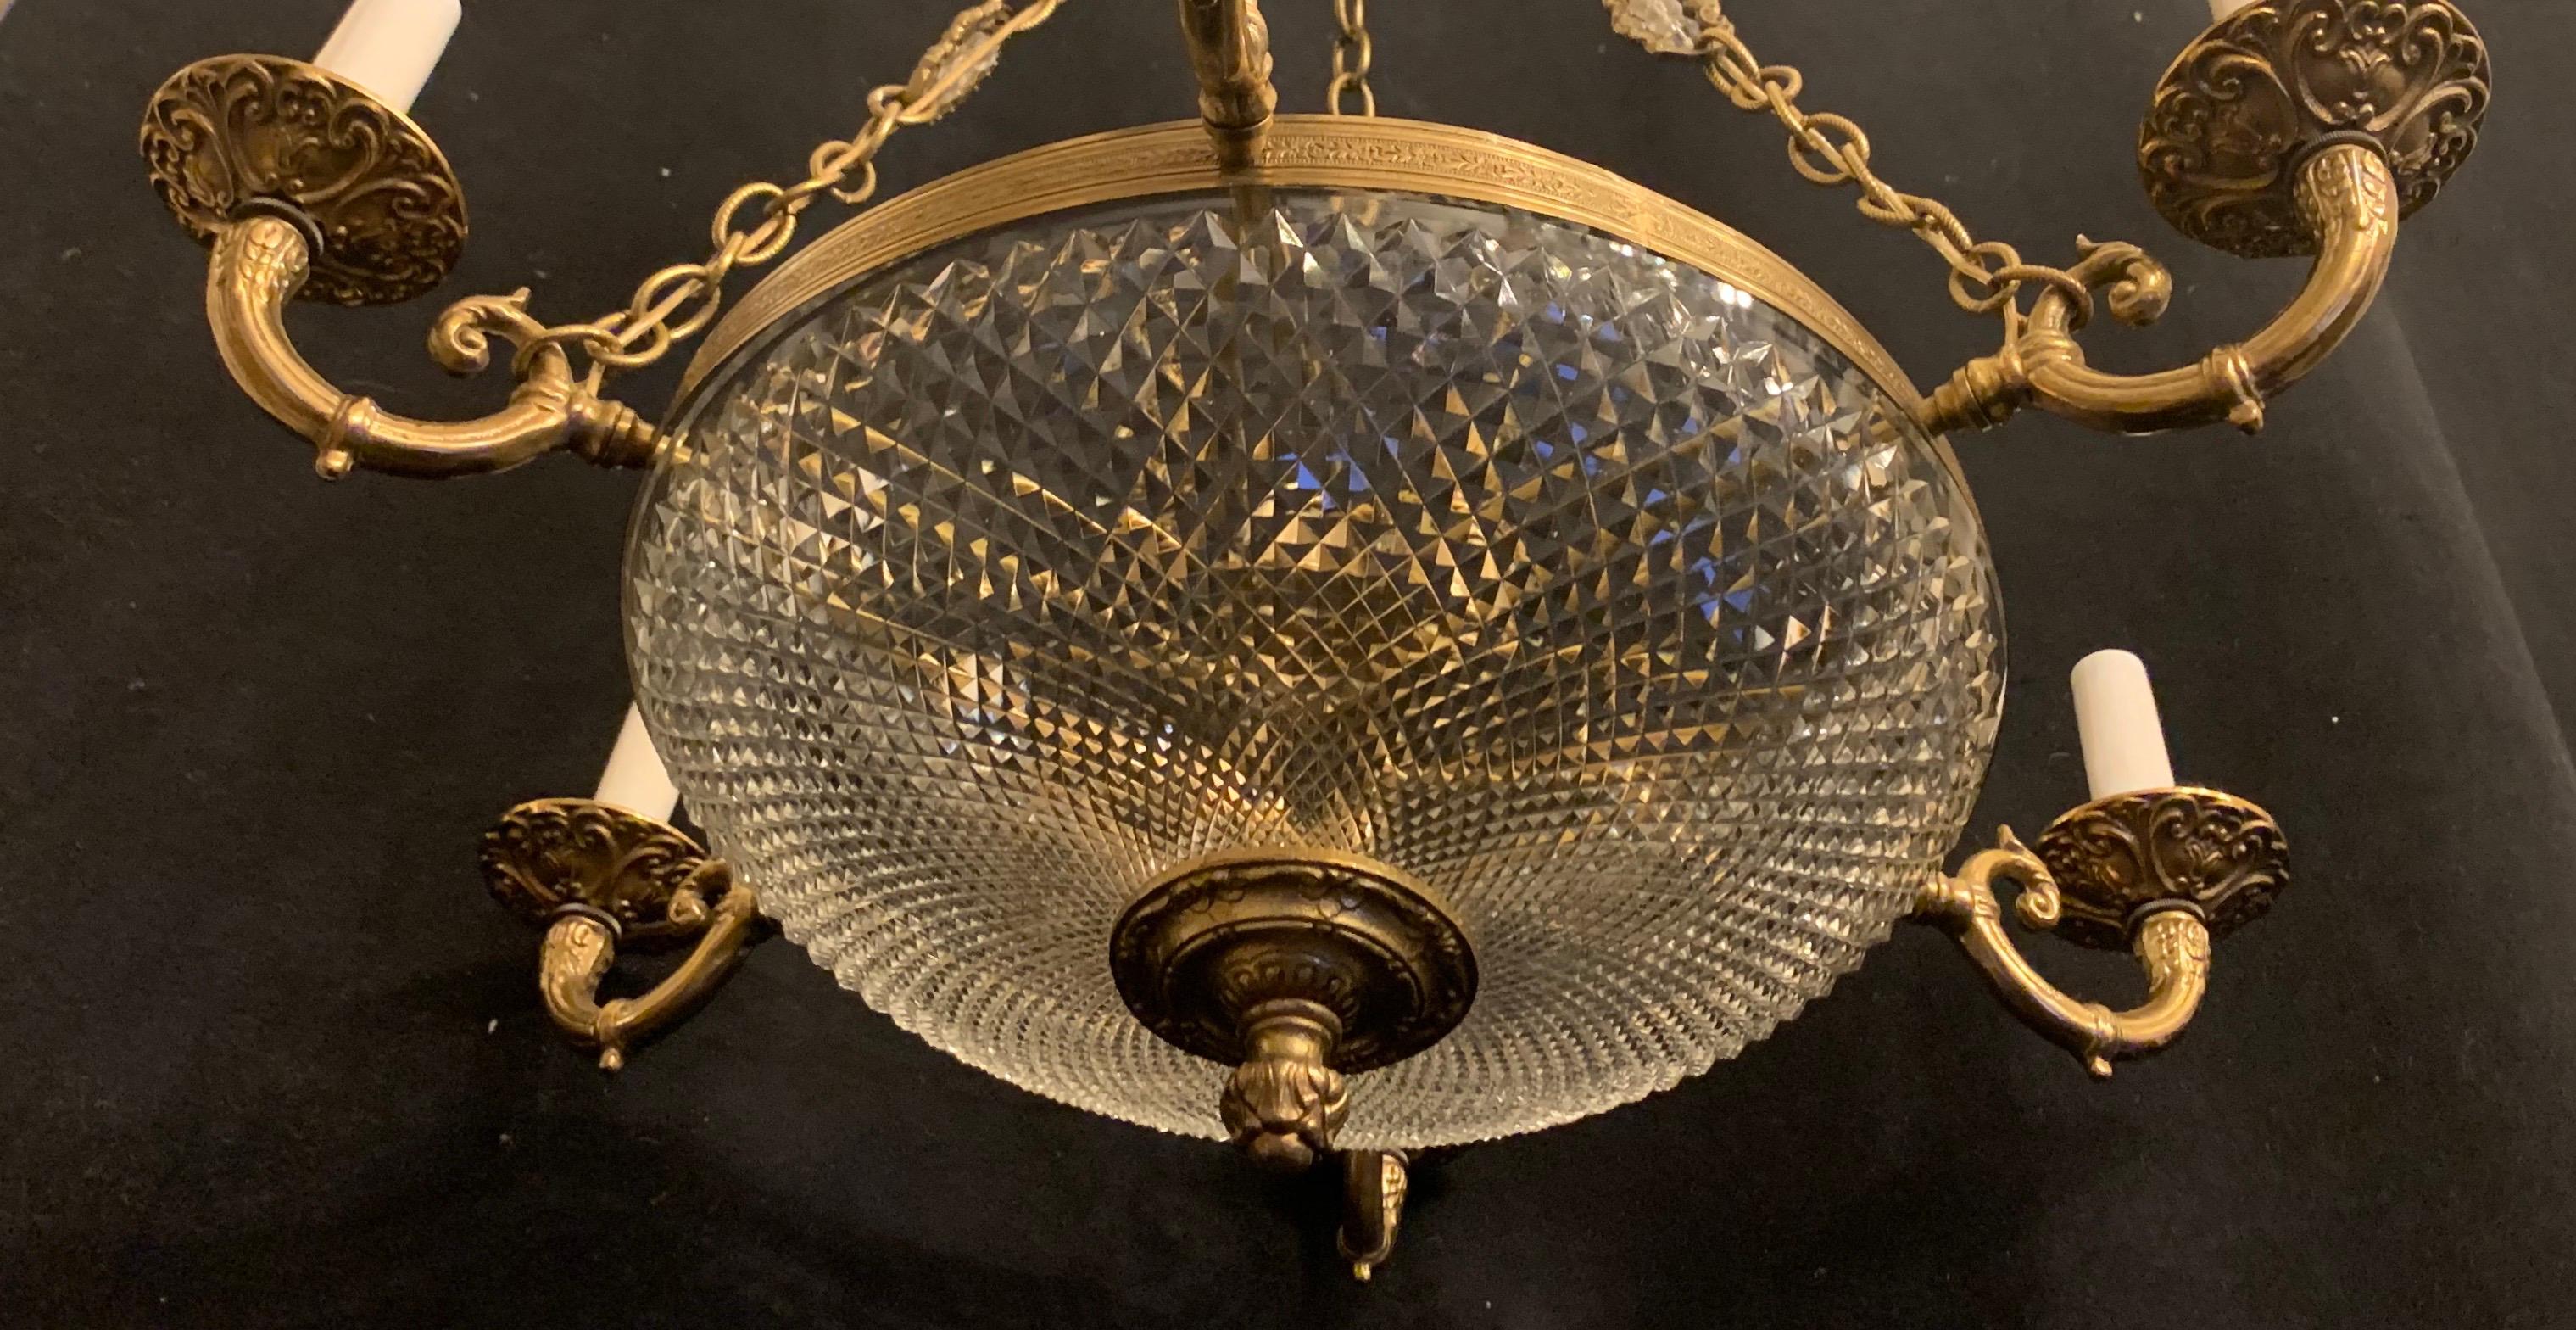 crystal bowl chandelier